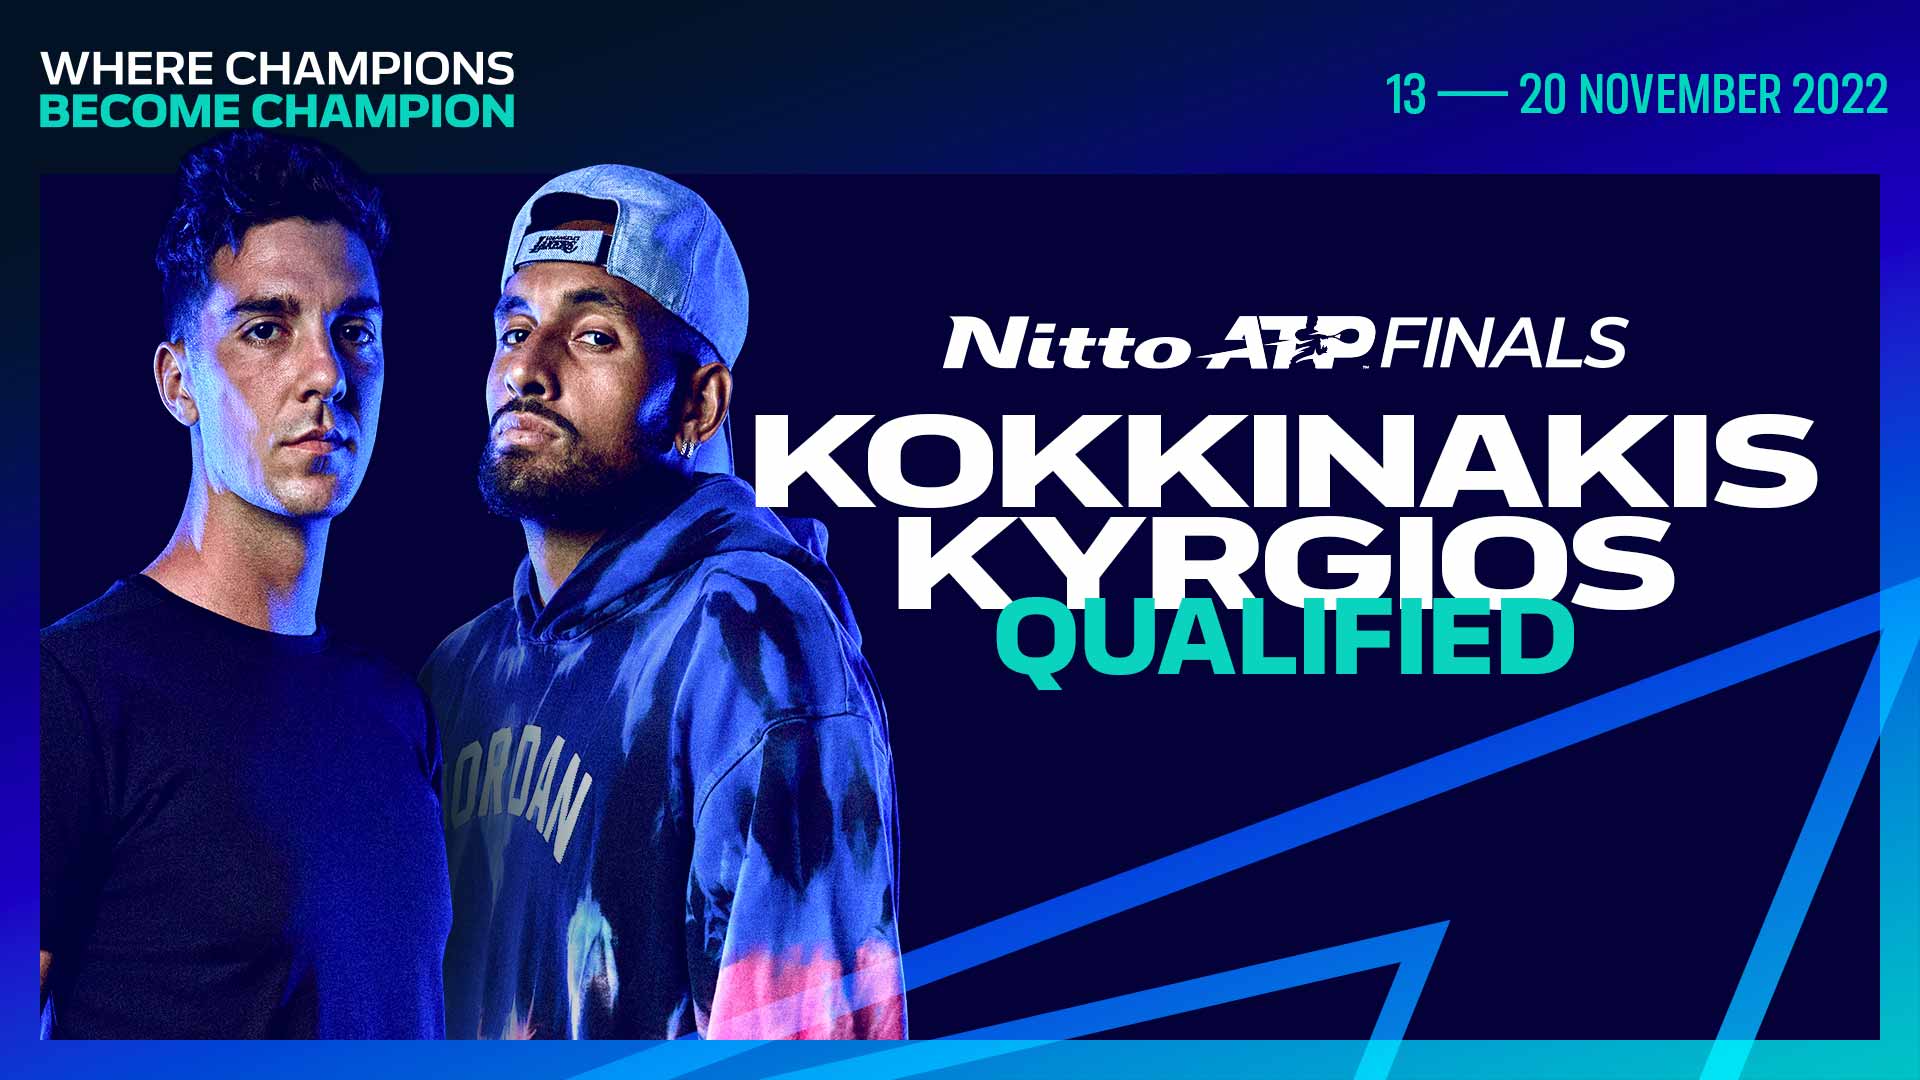 Kokkinakis andamp; Kyrgios Qualify For Nitto ATP Finals News Article Nitto ATP Finals Tennis